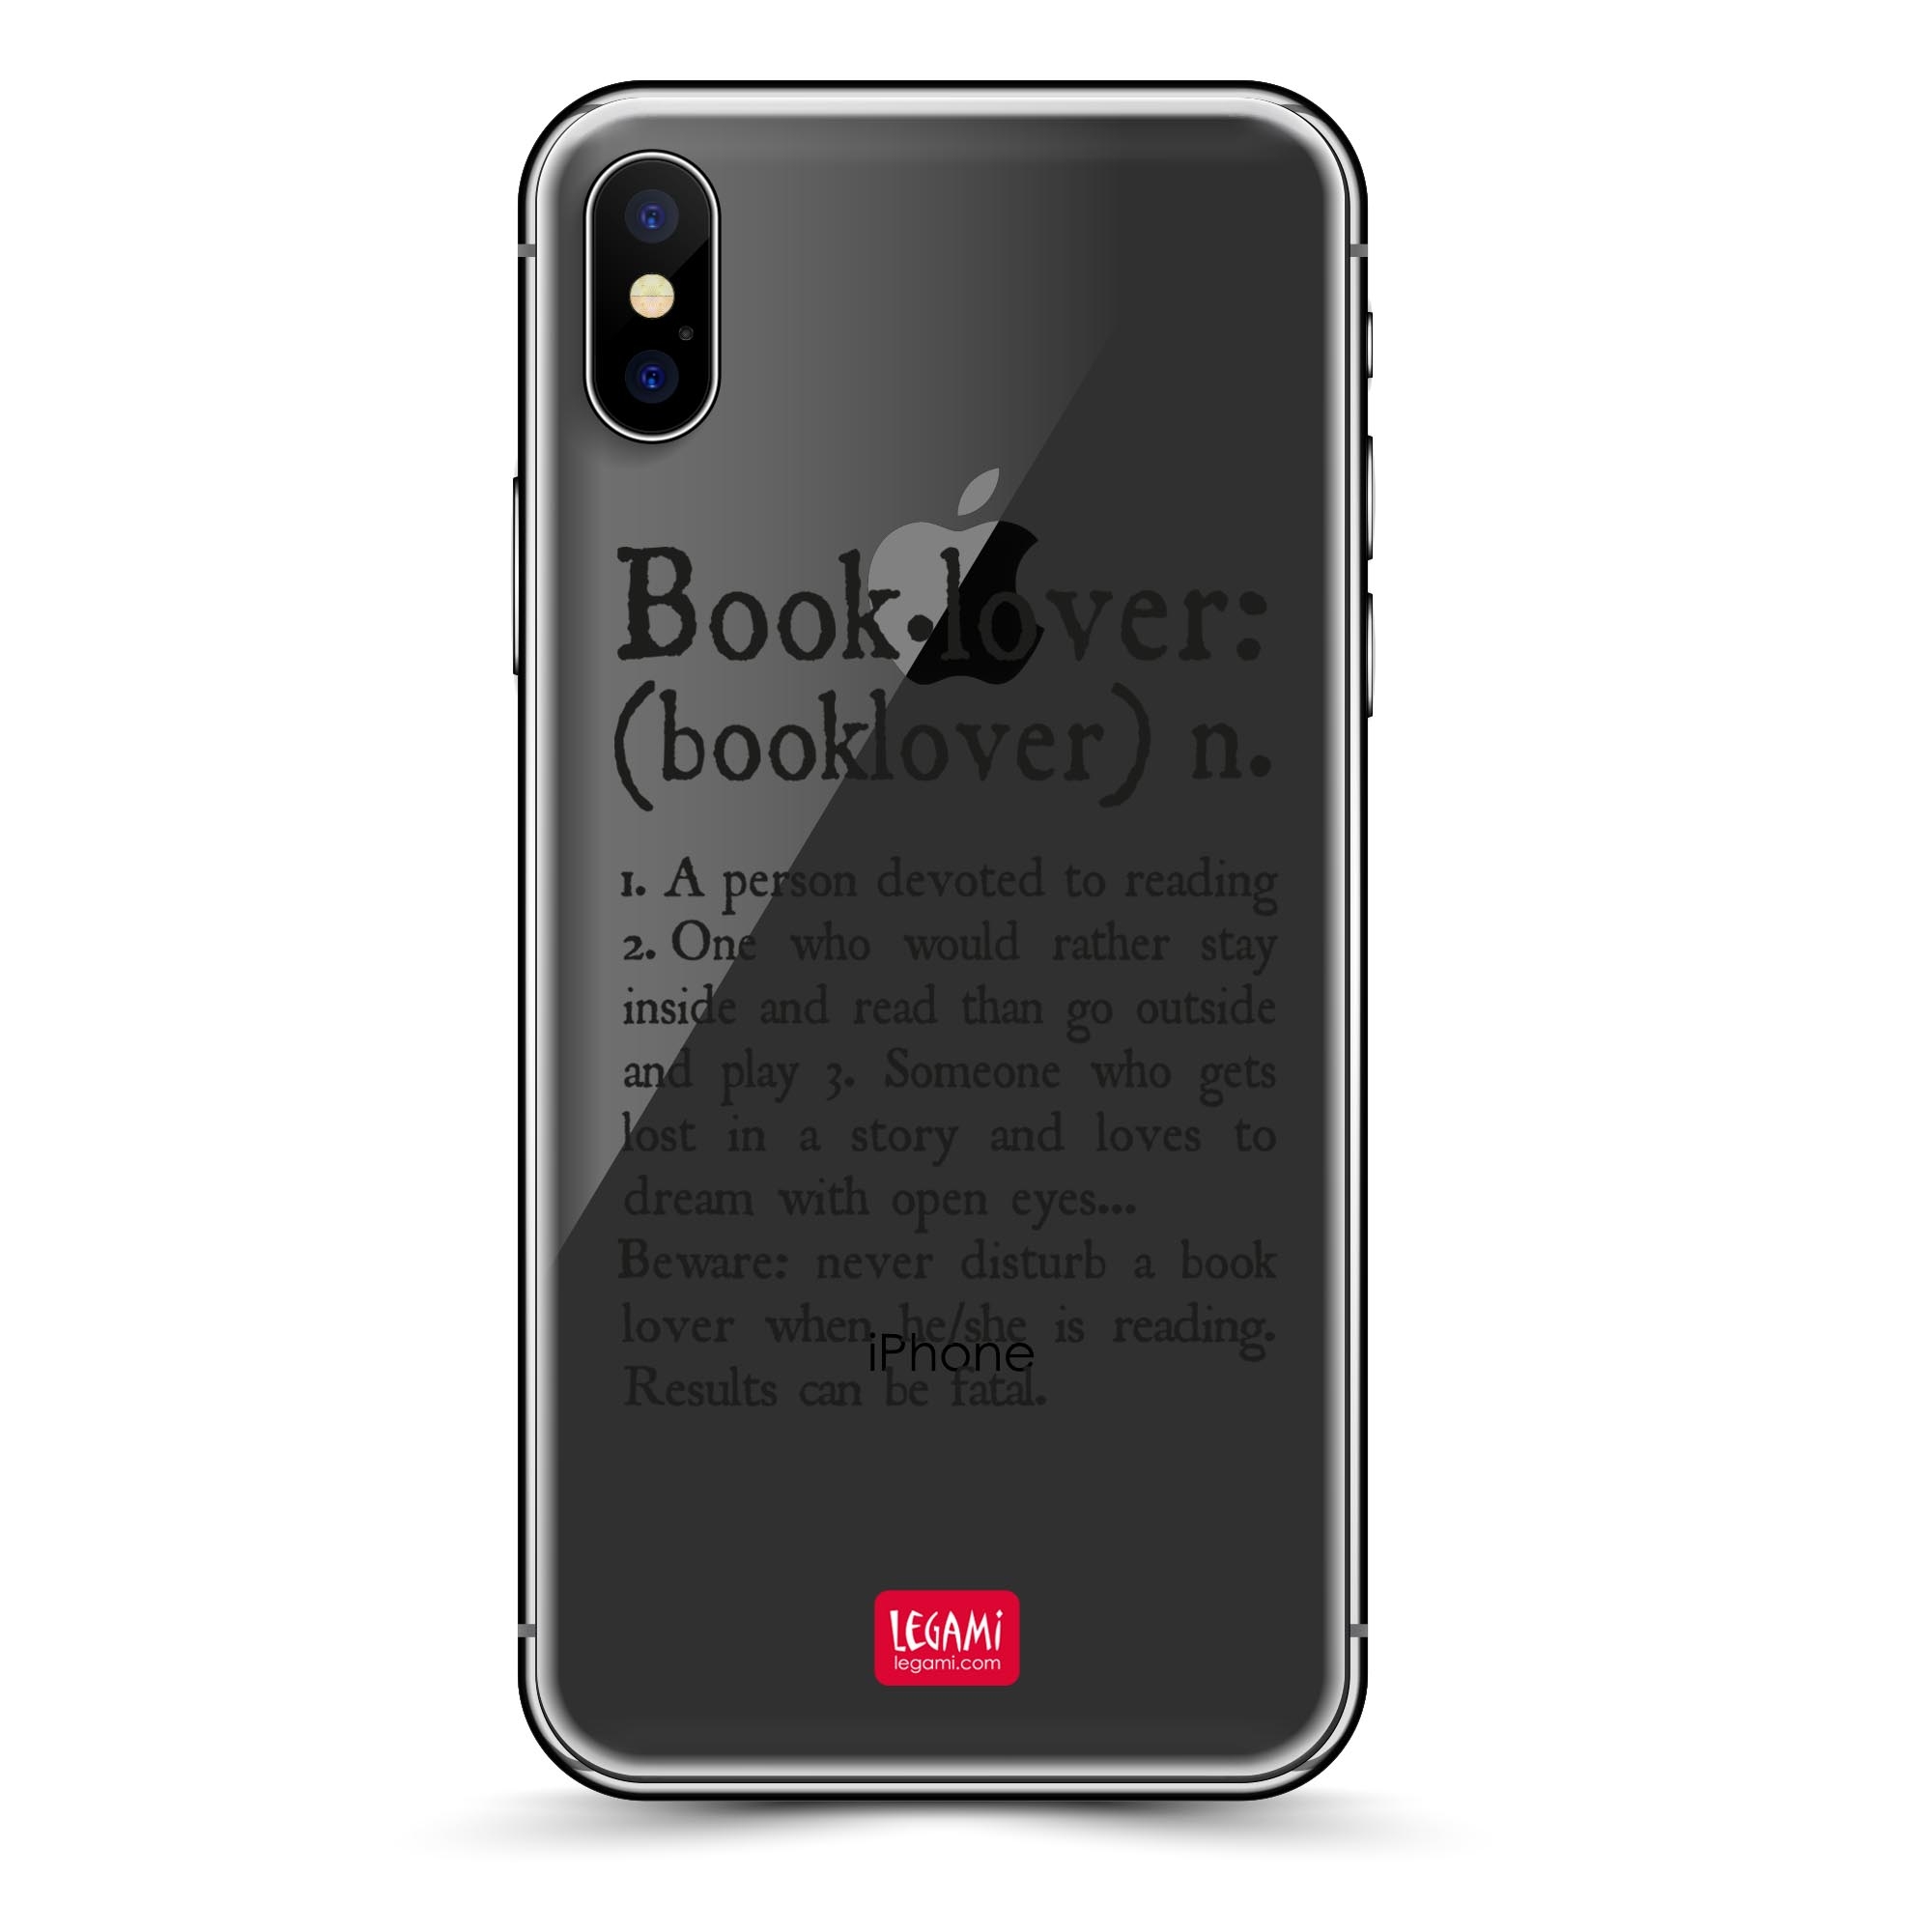  Carcasa Iphone X - Booklover | Legami 